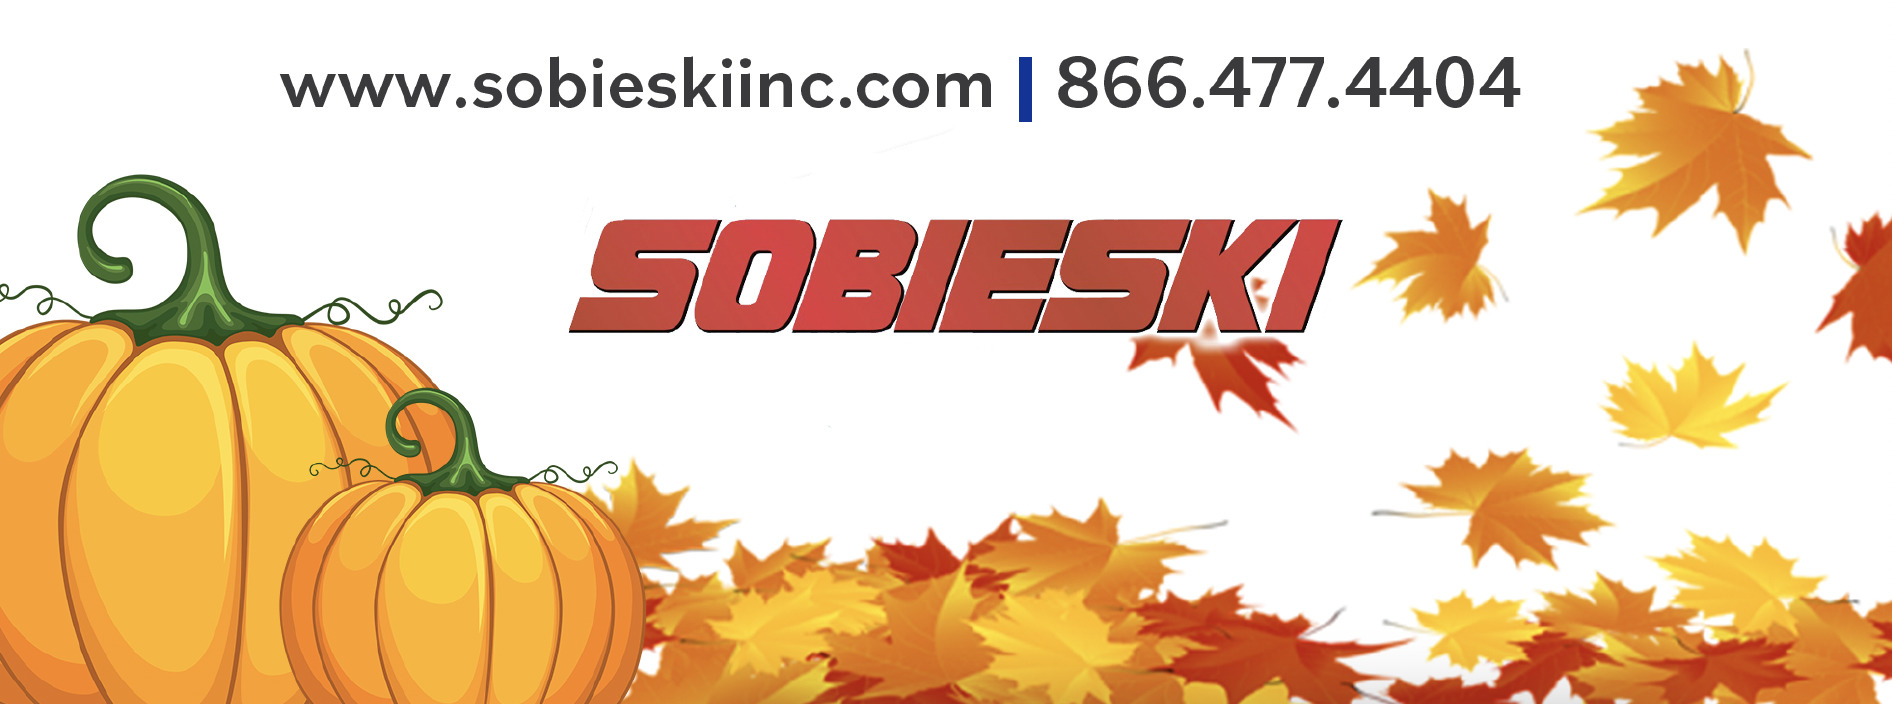 Footer image. Sobieski, pumpkins and fall leaves